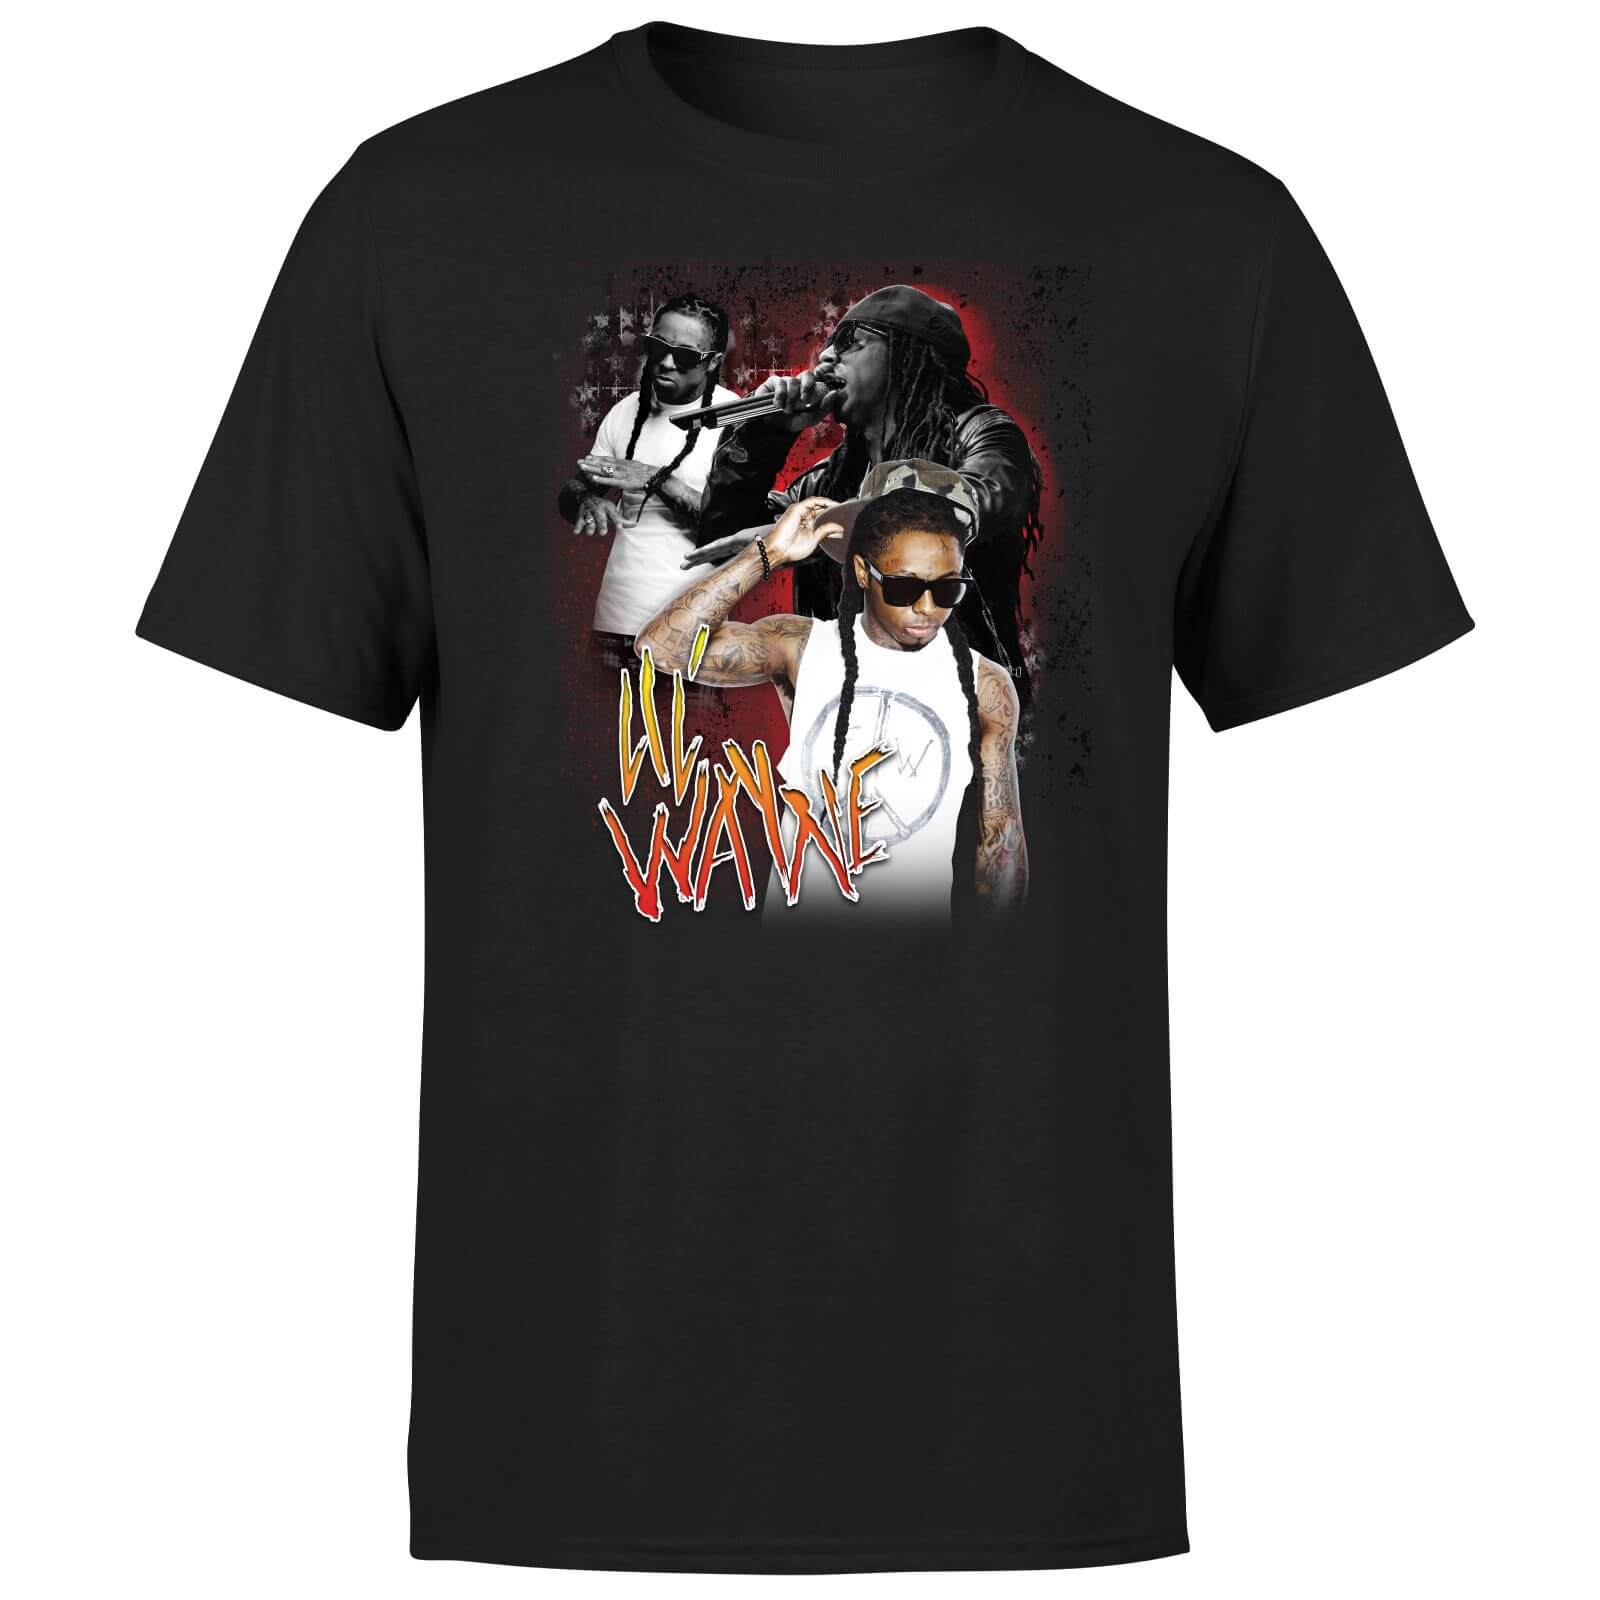 T-shirt Lil Wayne - Noir - Unisexe - M